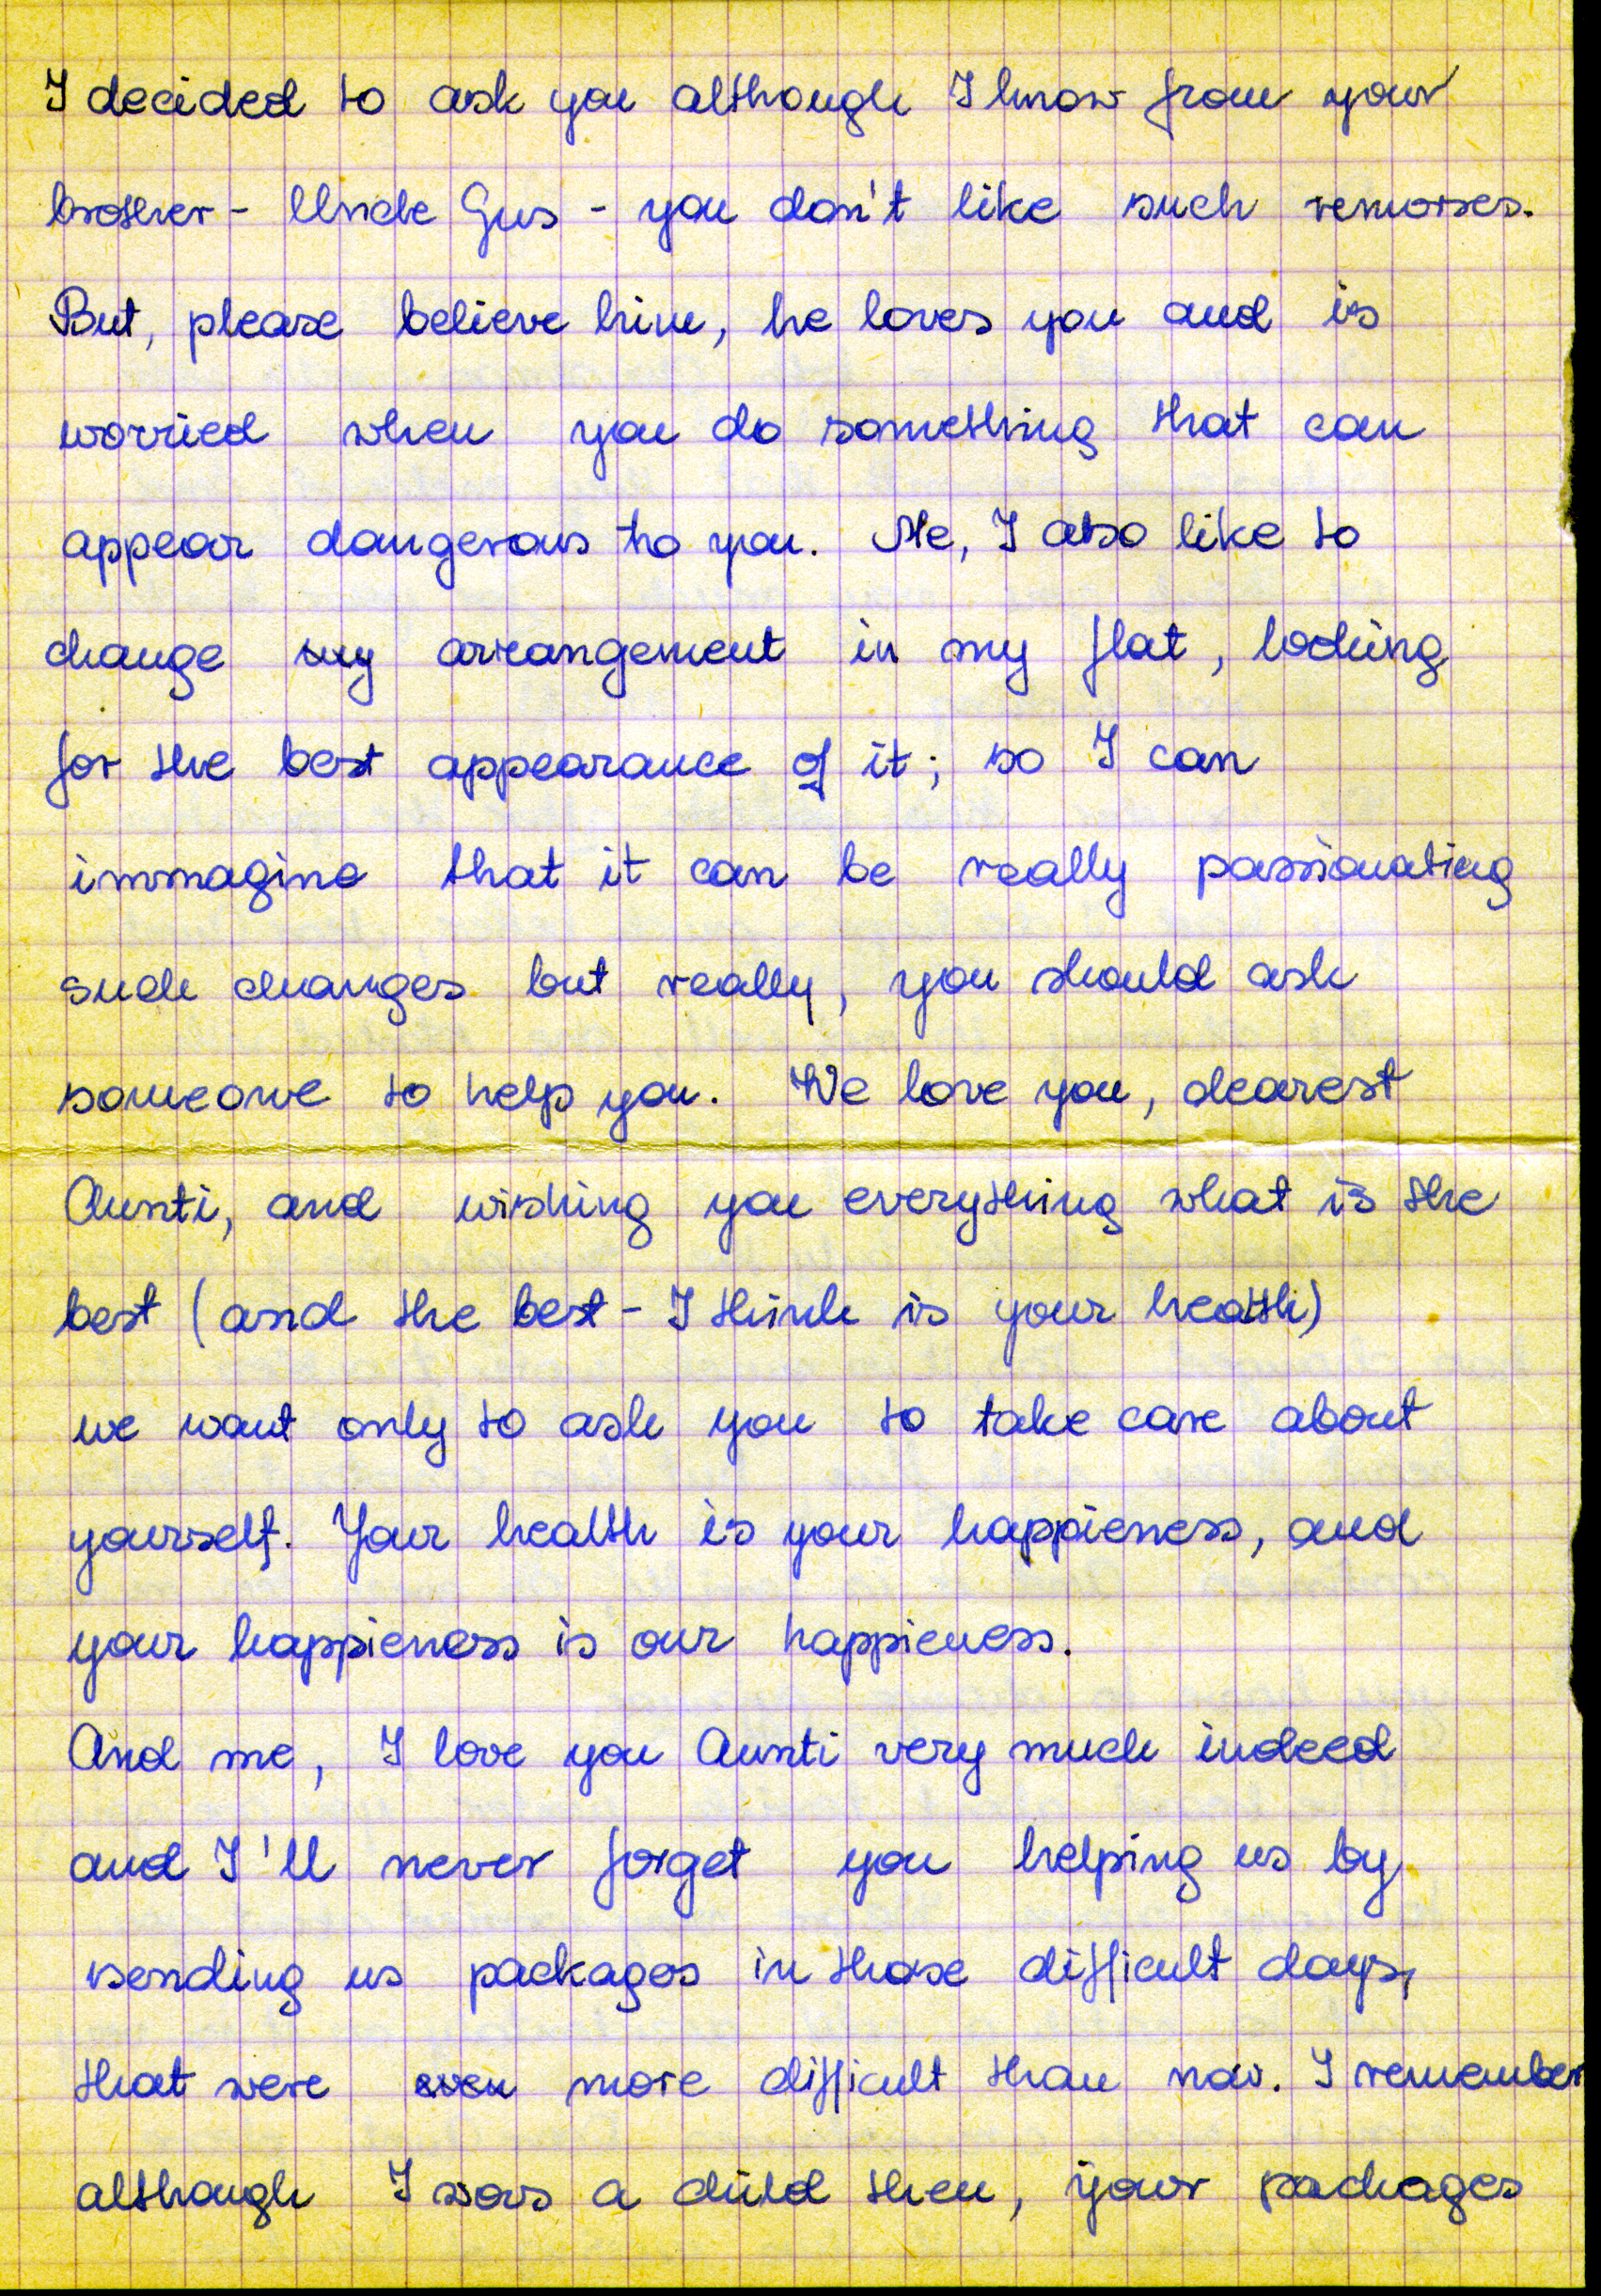 Barbara Karaszewska - Letter from Poland _page 2_ January 1978.jpg